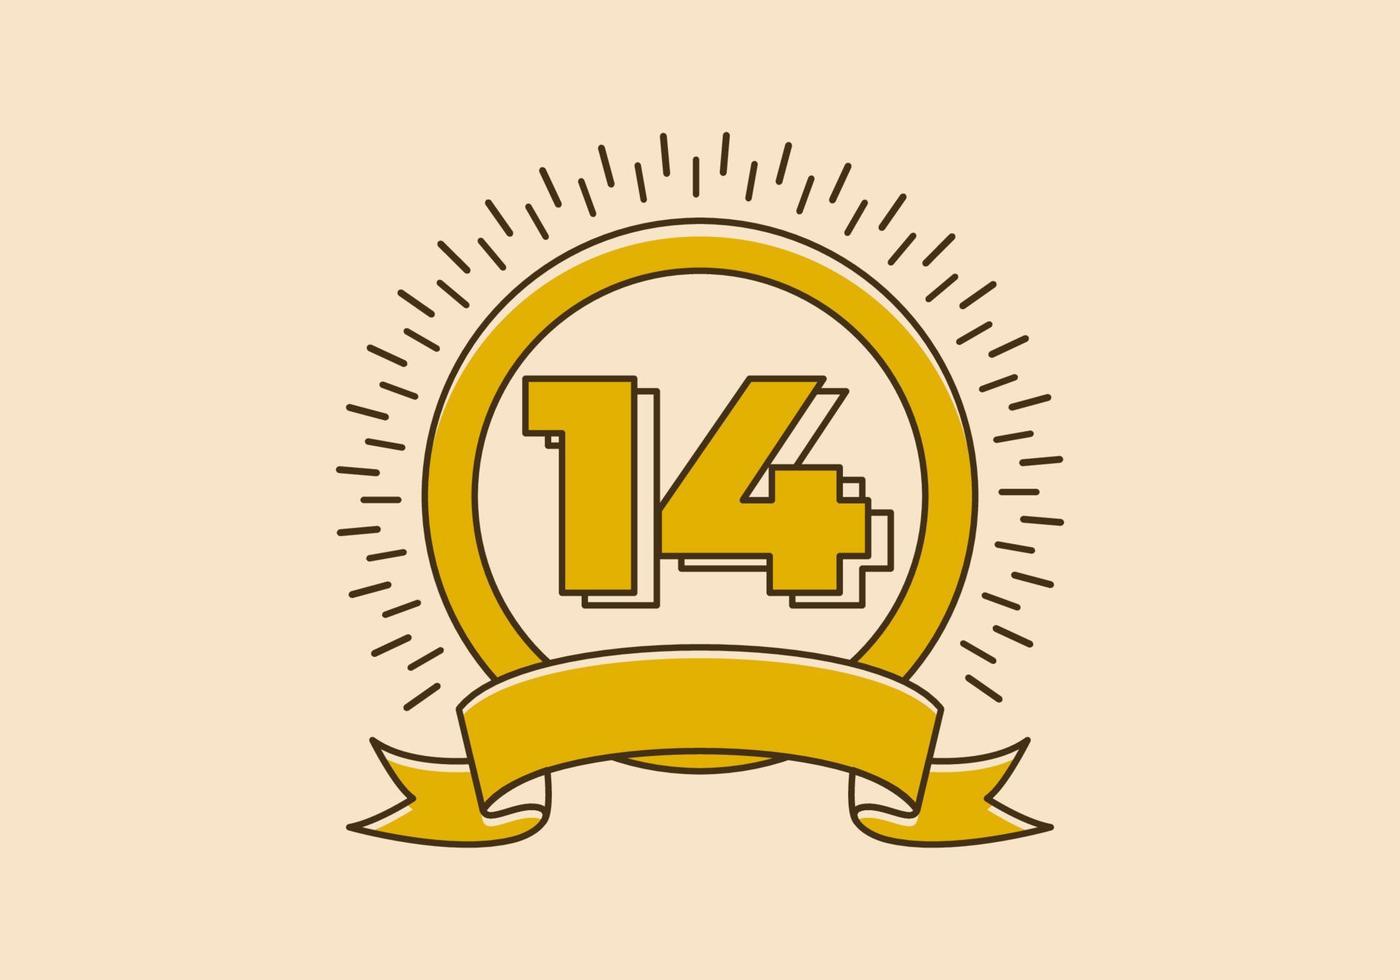 distintivo de círculo amarelo vintage com o número 15 nele vetor